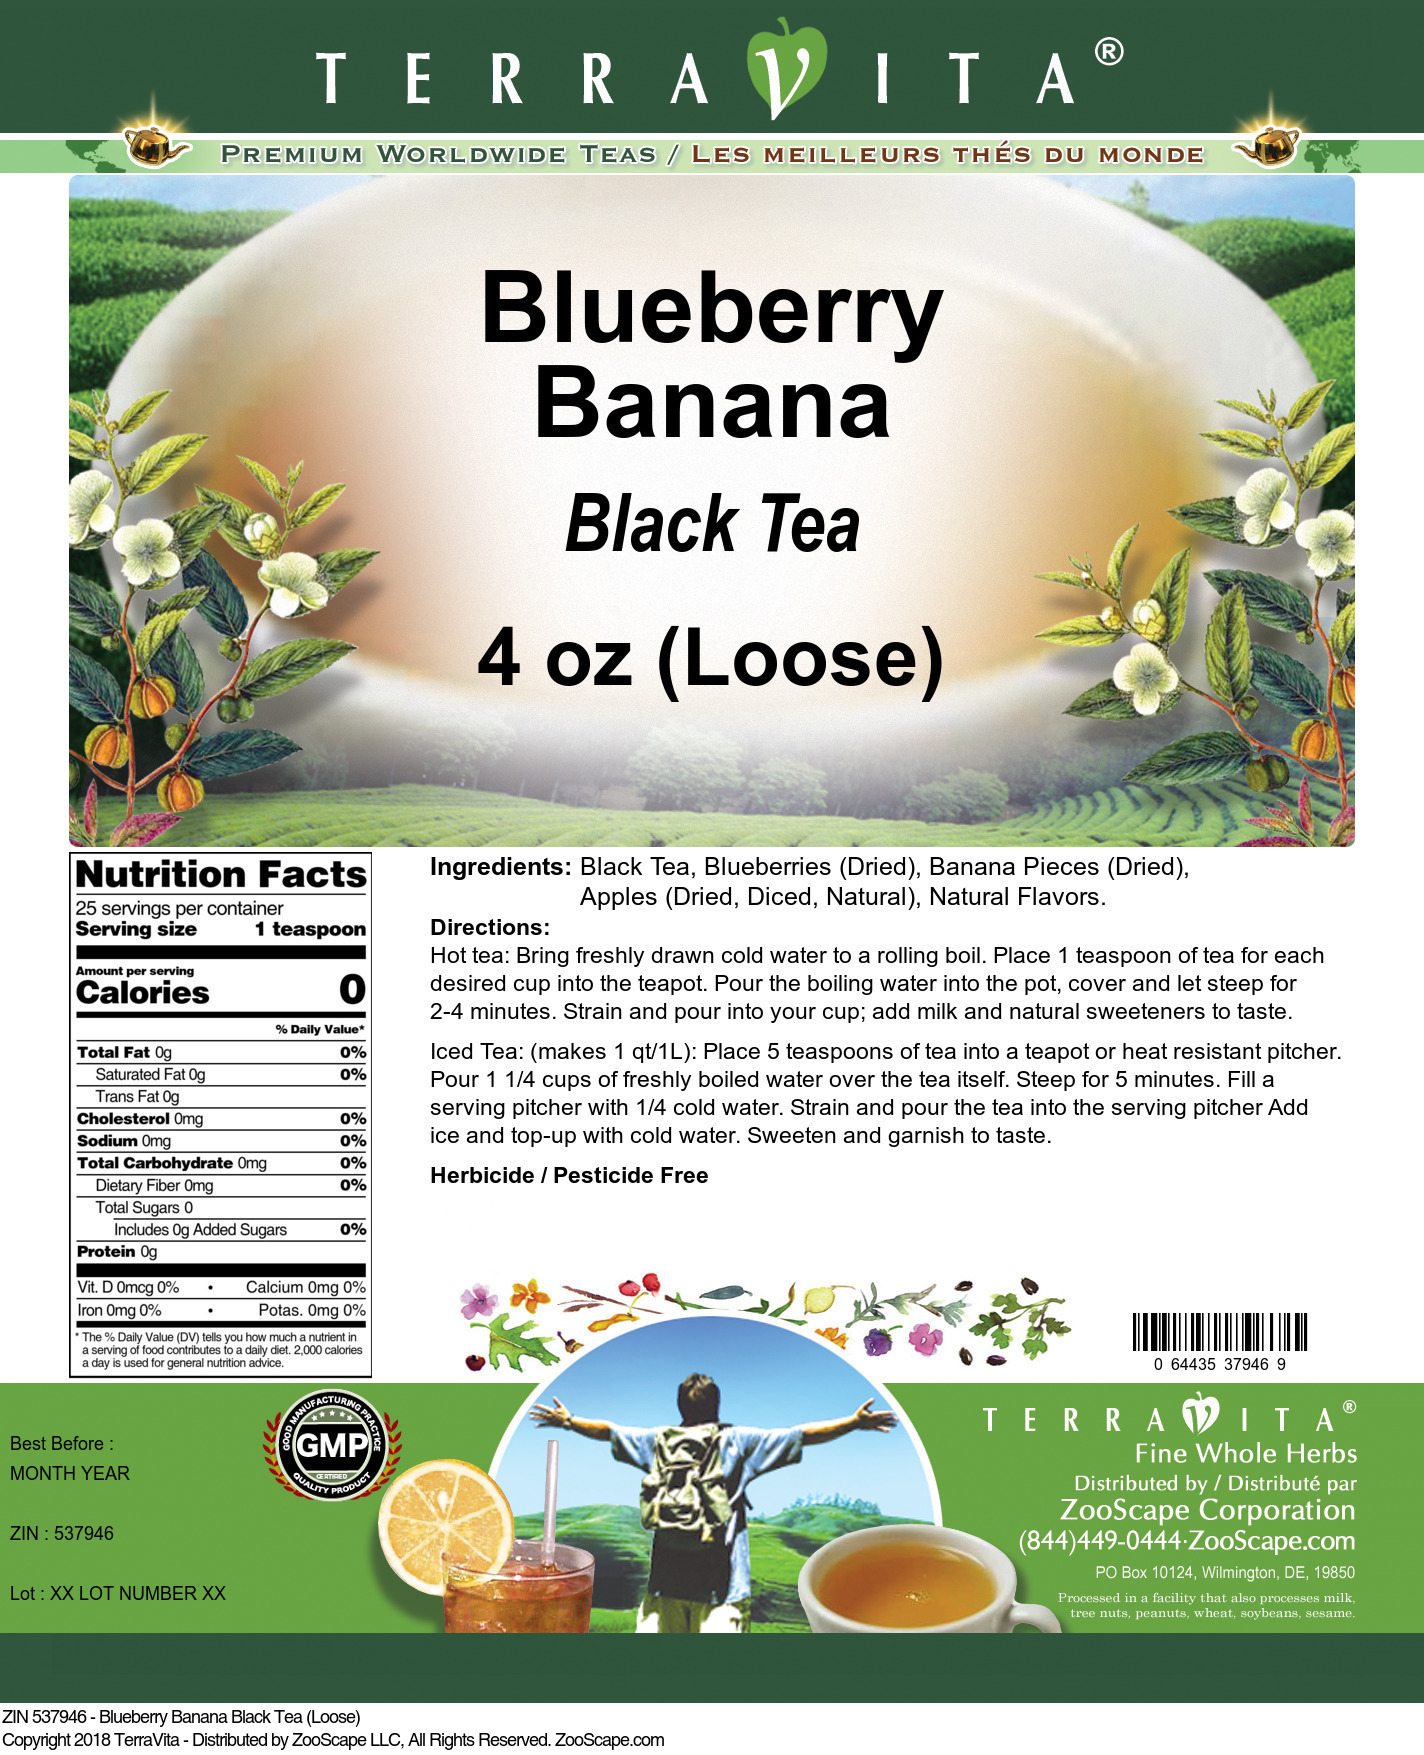 Blueberry Banana Black Tea (Loose) - Label